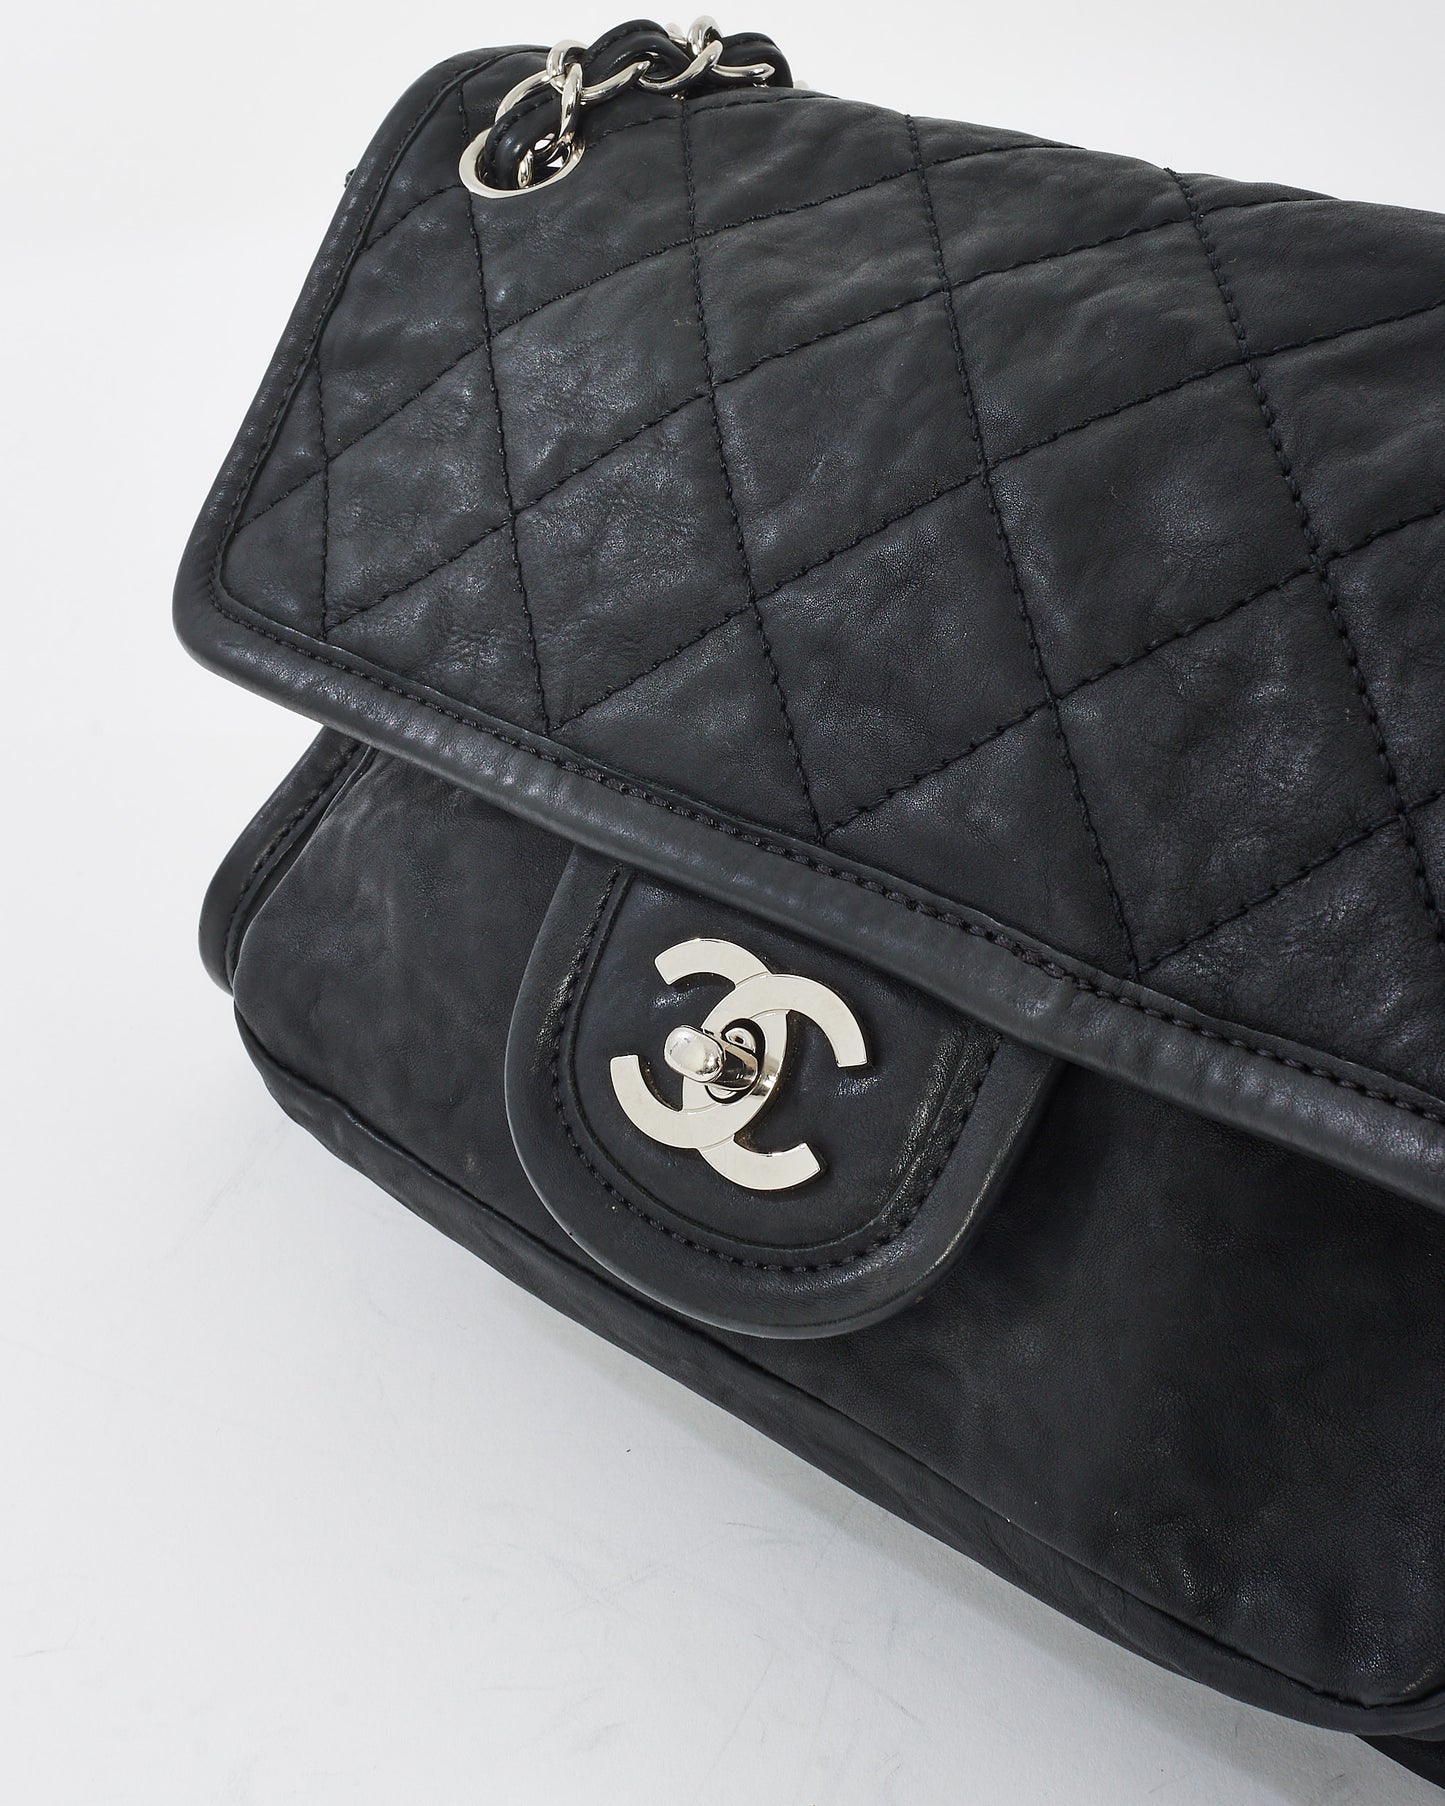 Chanel Black Calfskin Leather Double Pocket Flap Bag SHW